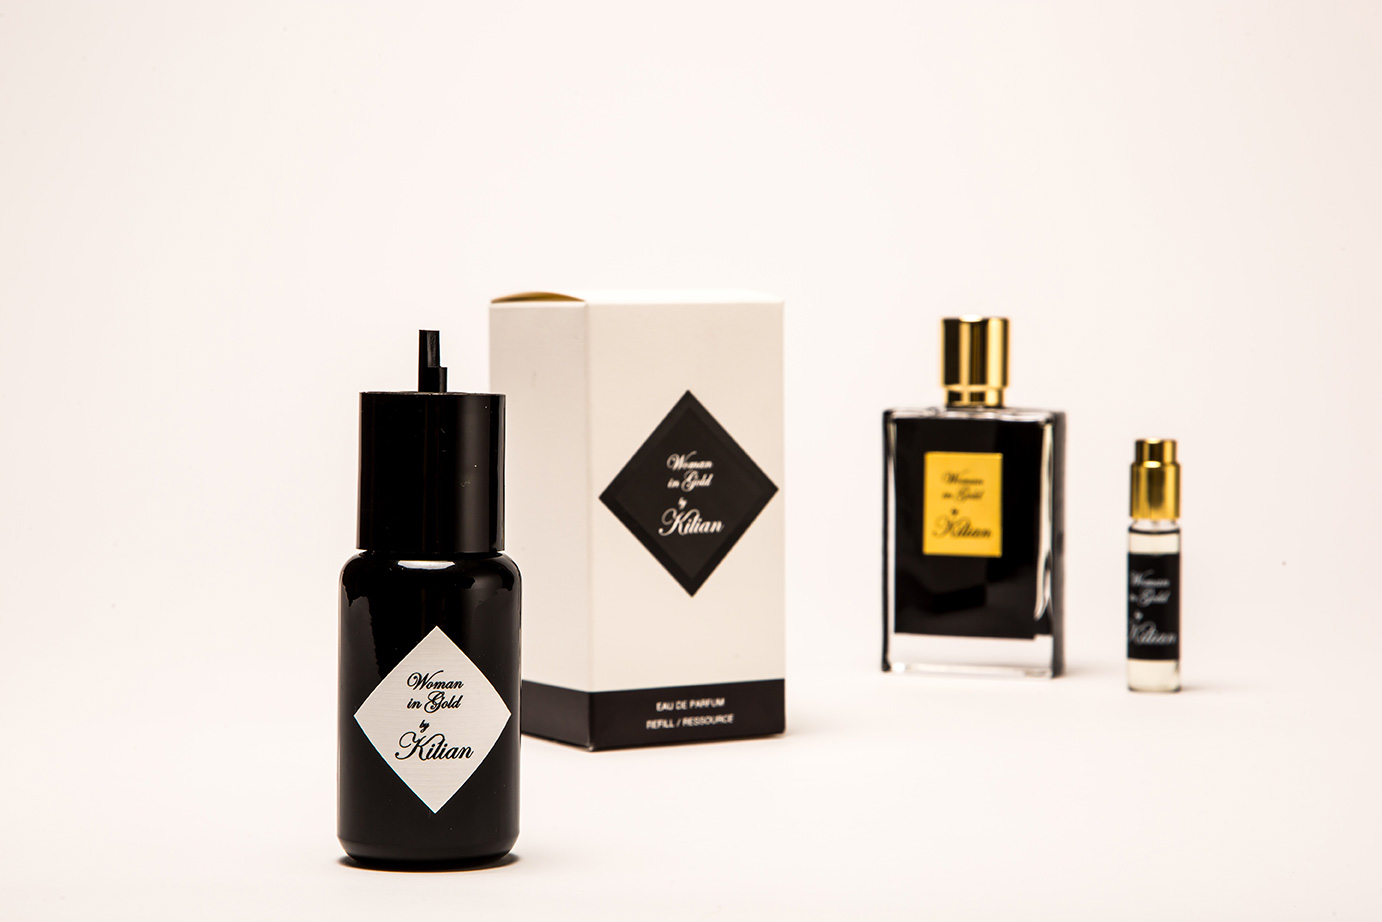 RT-Twist by Techniplast widens the range of perfume refill options